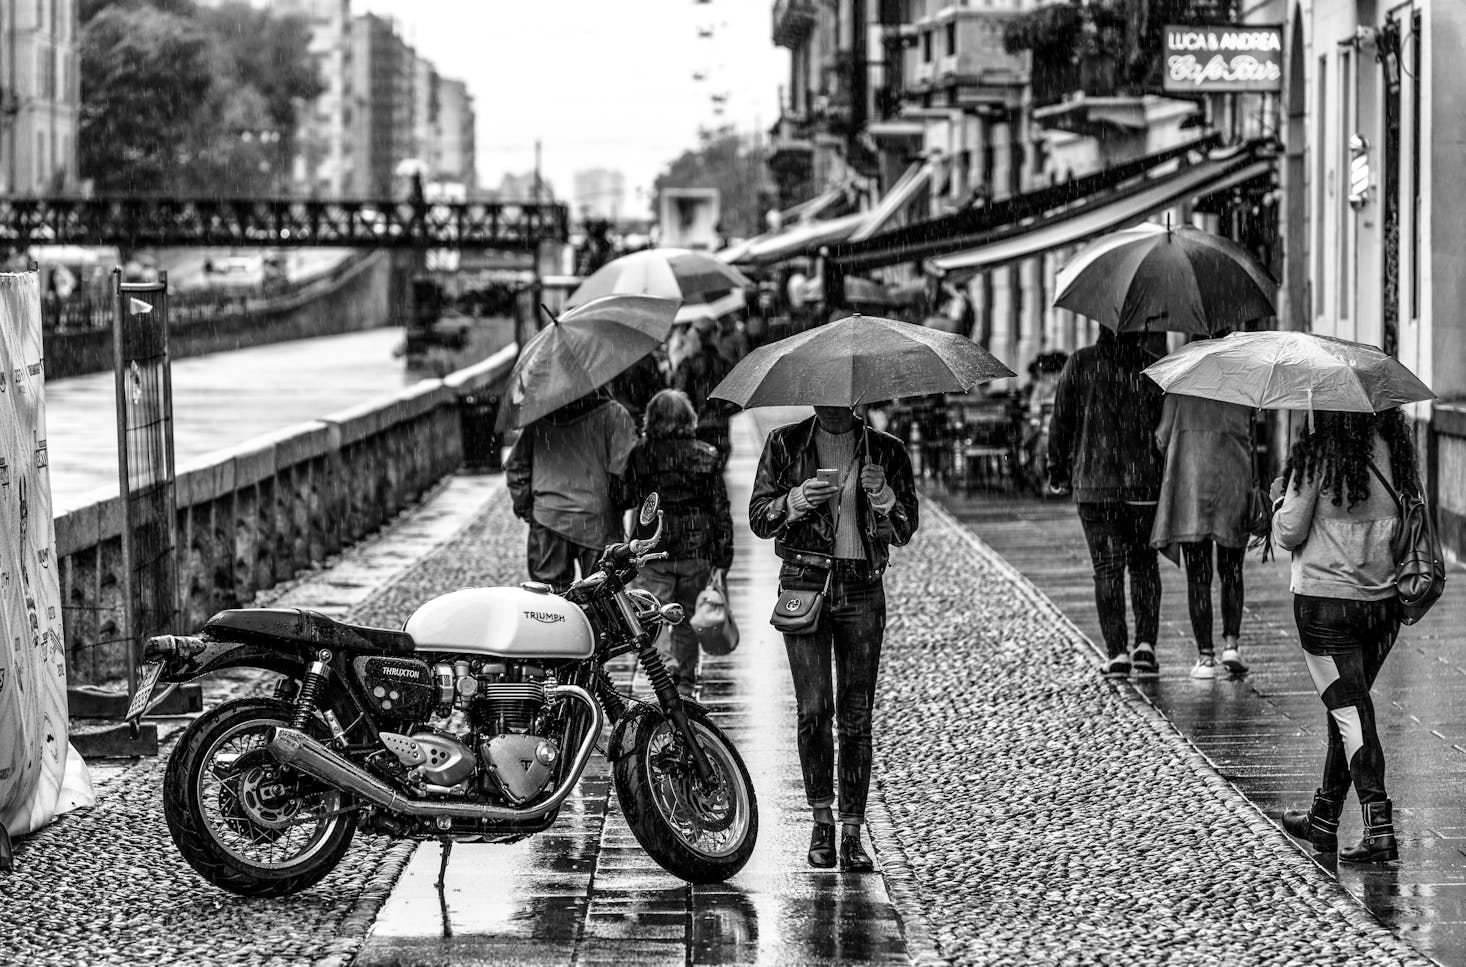 Milan on a Rainy Day